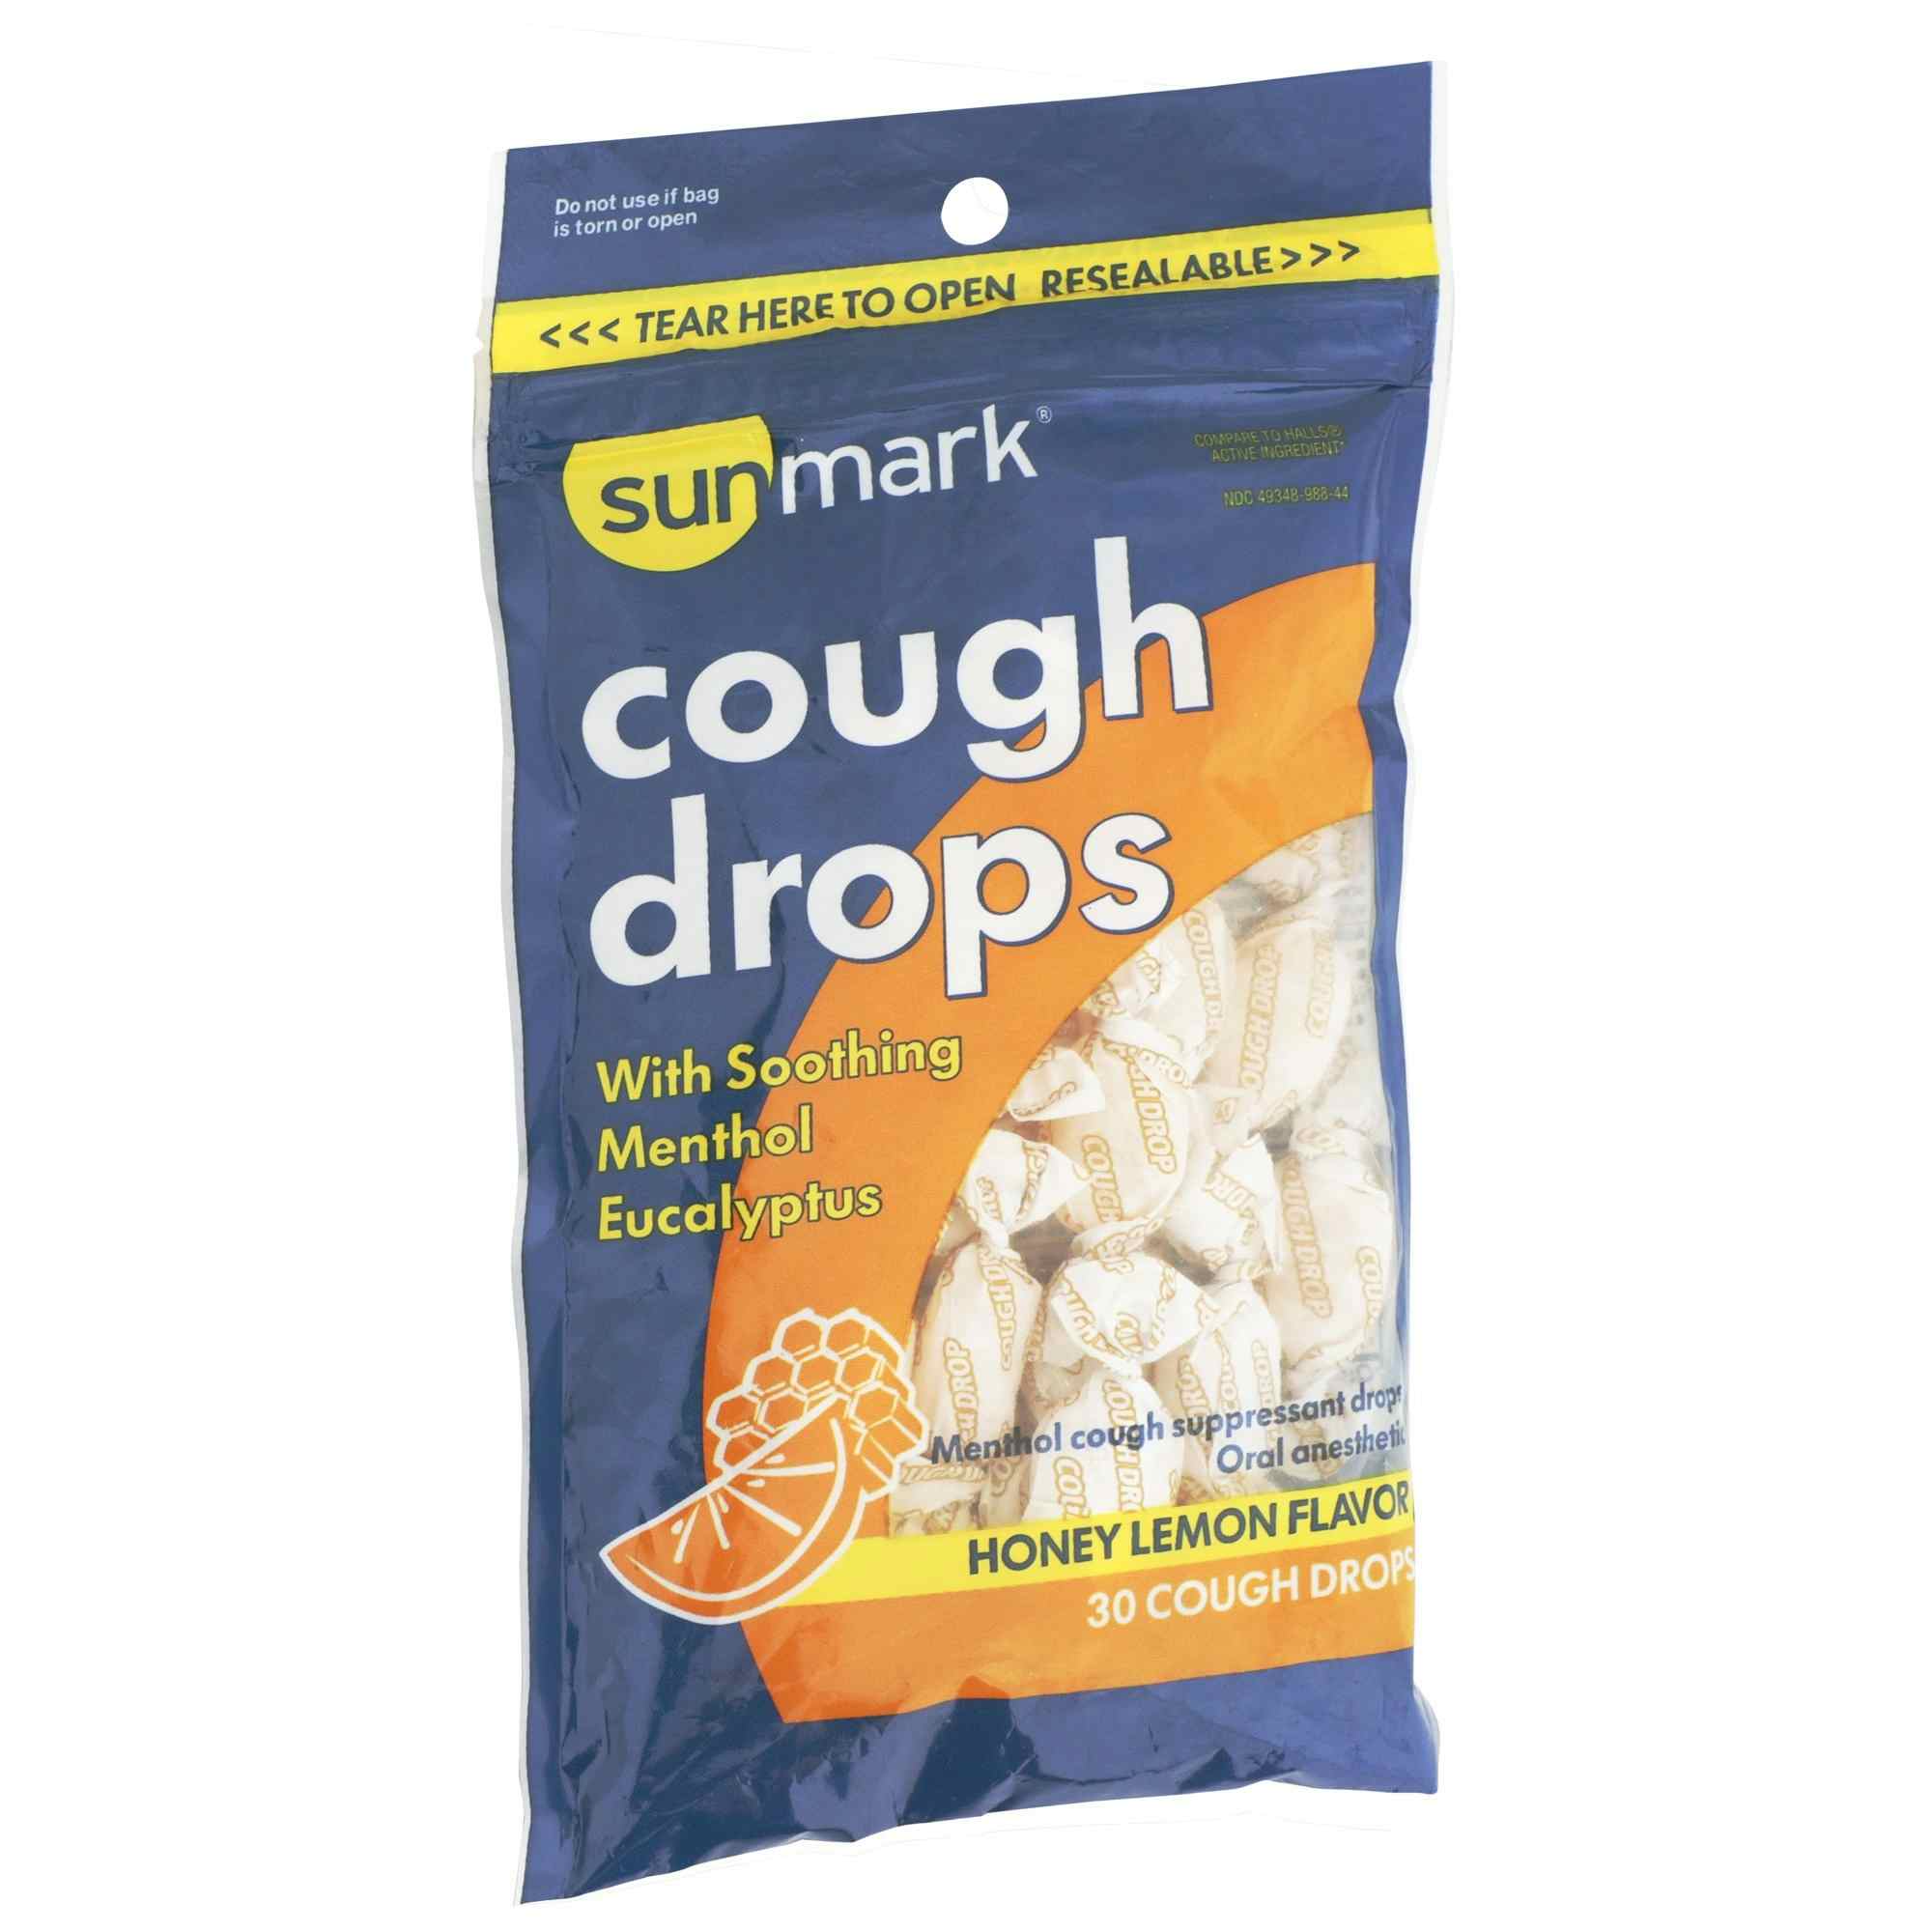 Sunmark Cough Drops with Soothing Menthol Eucalyptus, 49348098844, Honey Lemon - Bag of 30